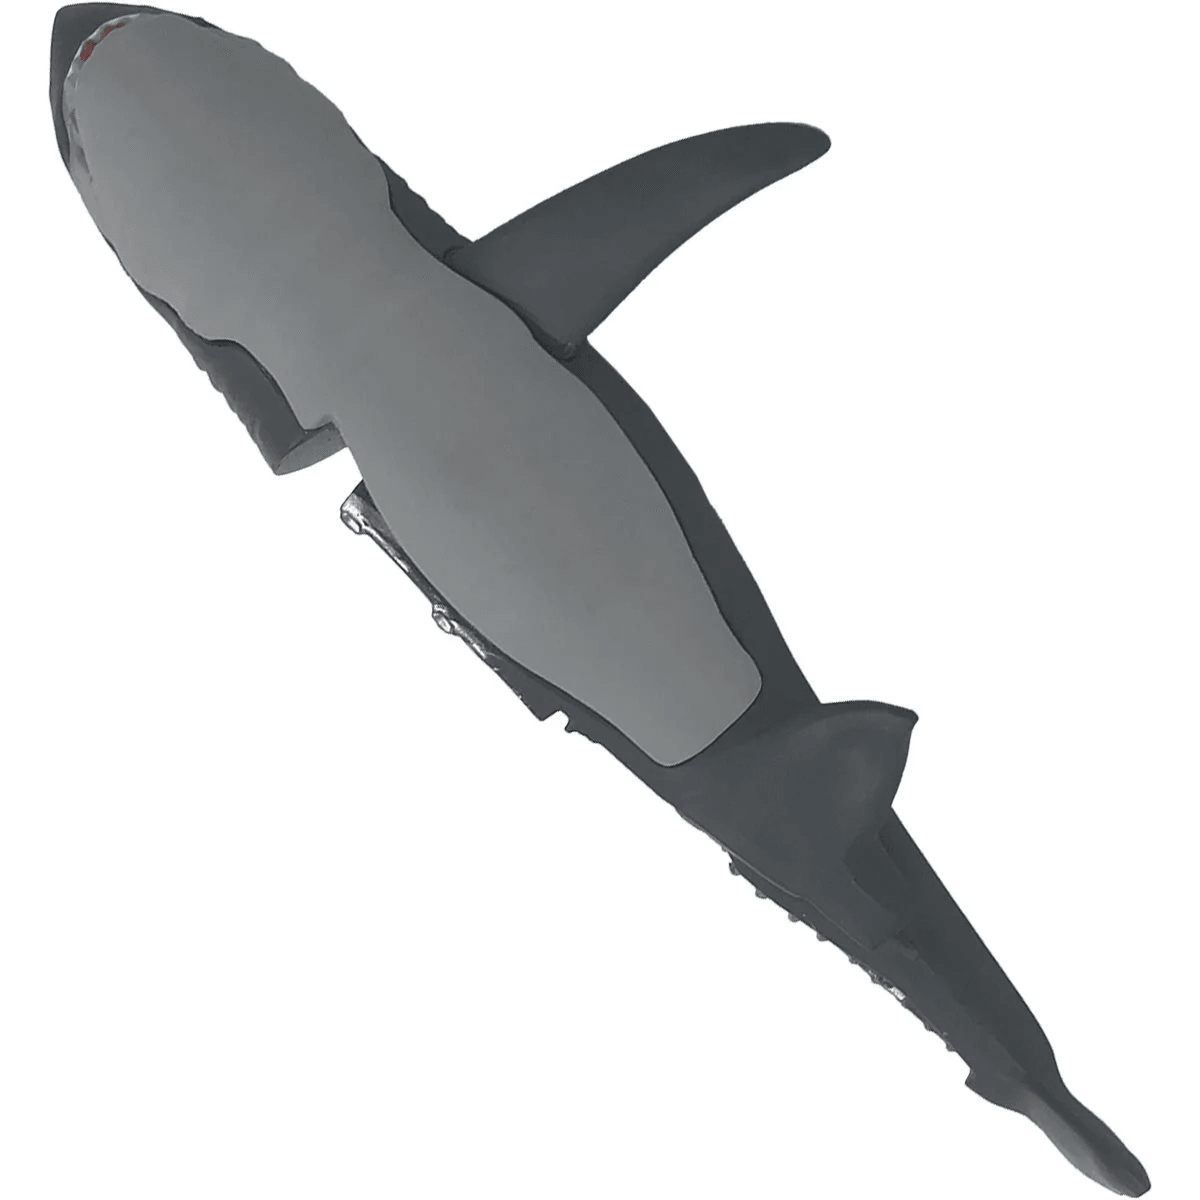 FAC408425 Jaws - Mechanical Bruce Shark Scaled Replica - Factory Entertainment - Titan Pop Culture